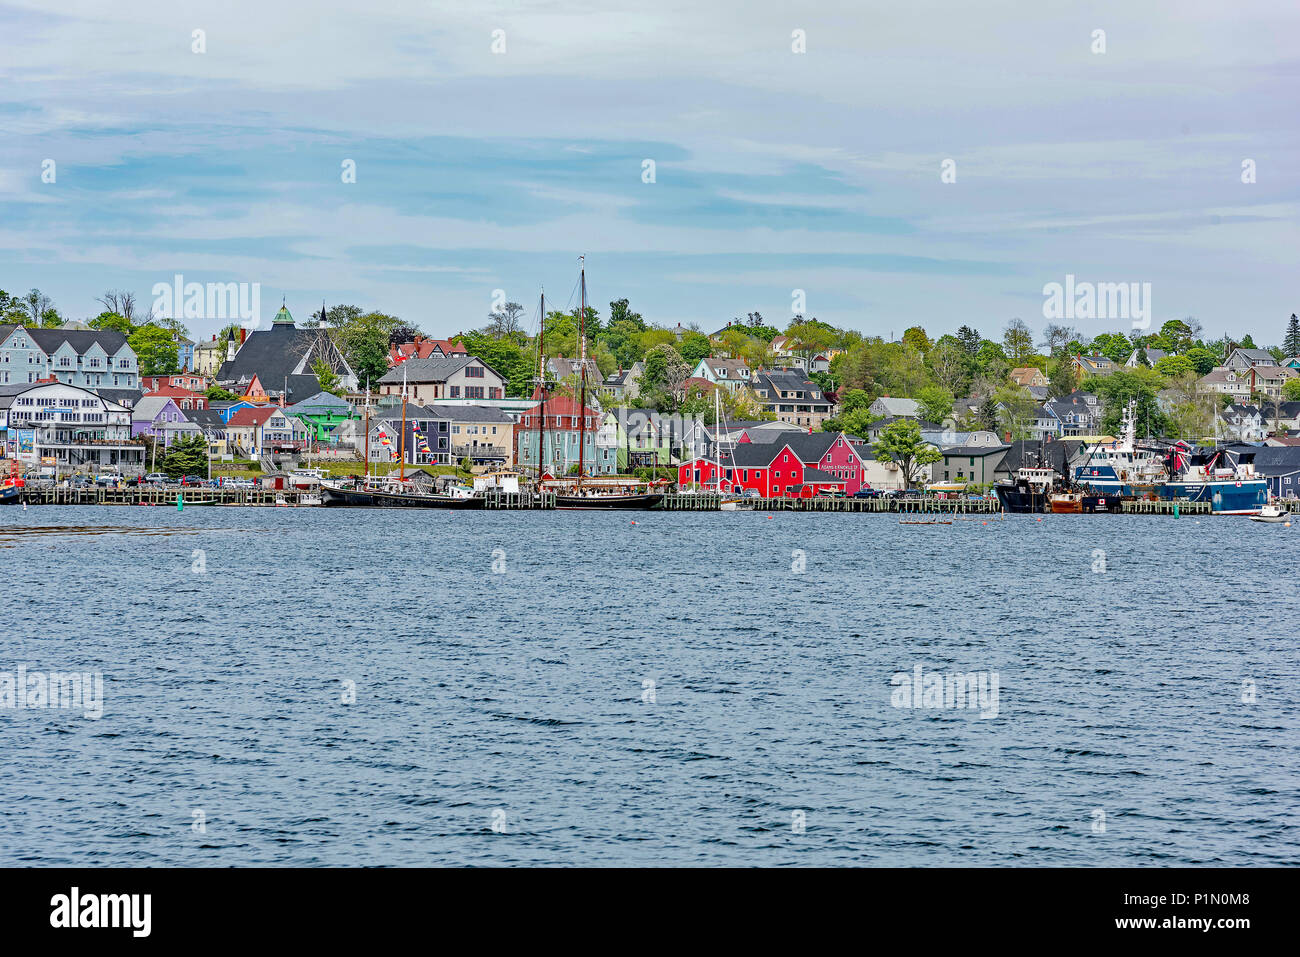 Lunenburg waterfront from across the bay. Lunenburg, Nova Scotia, Canada. Stock Photo